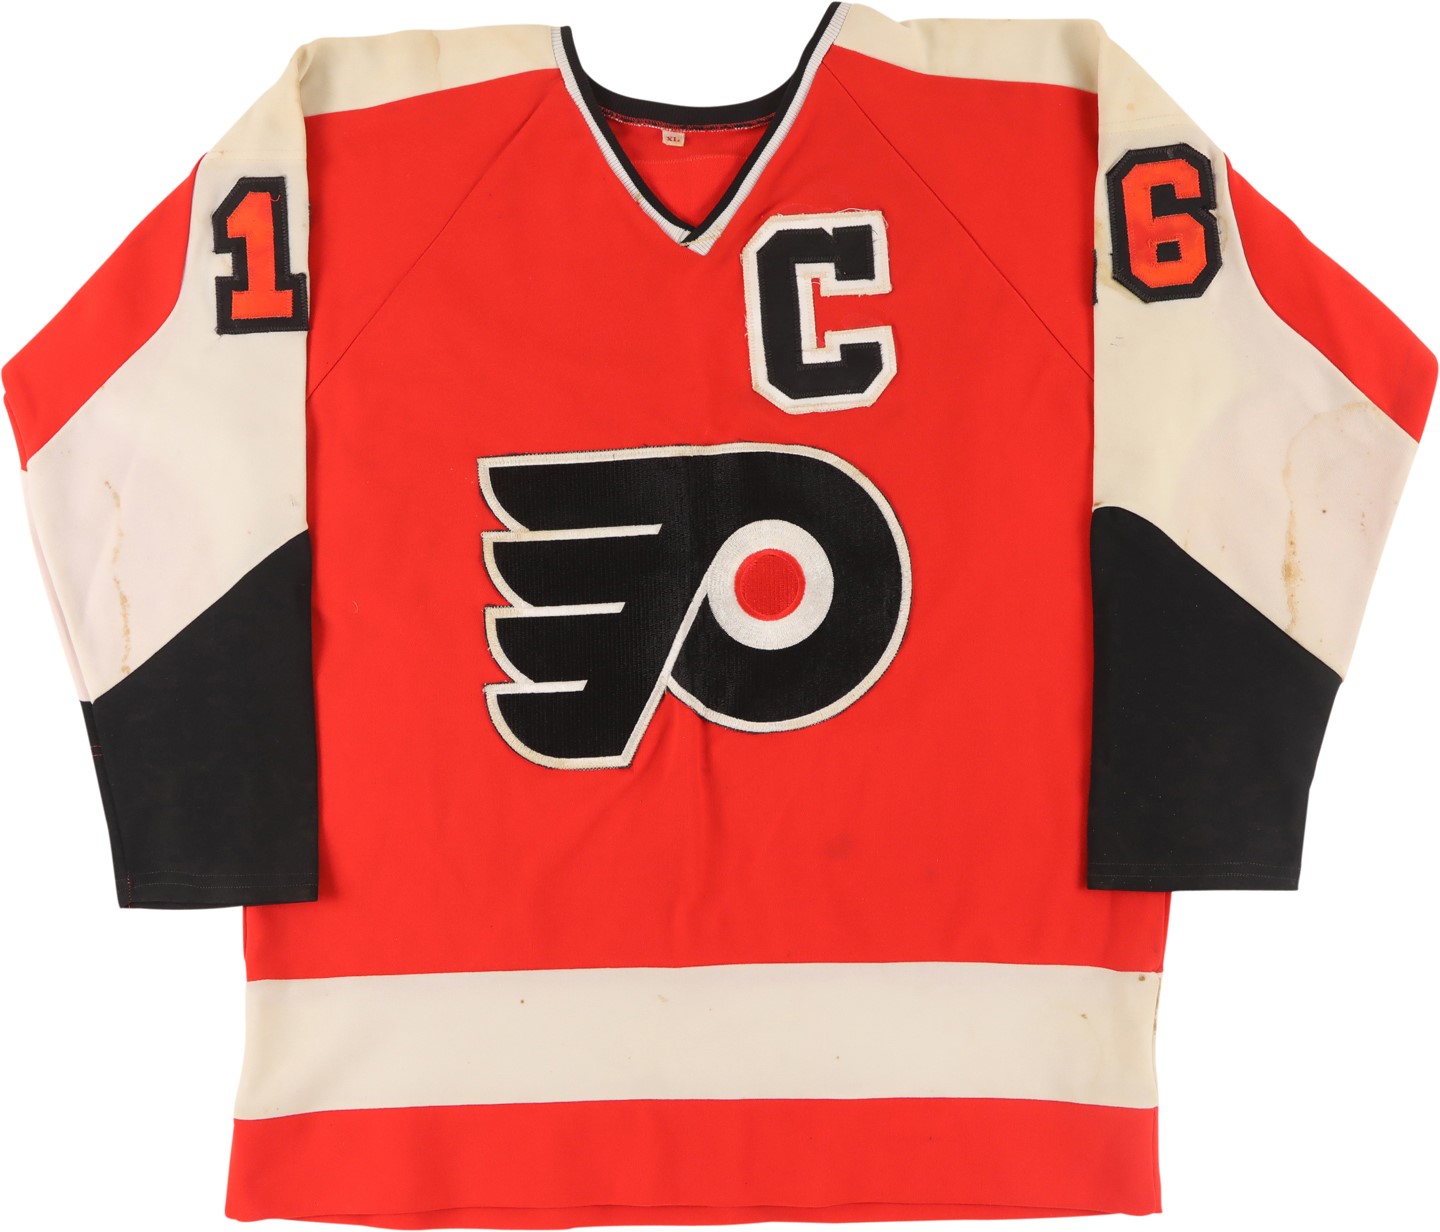 Circa 1976 Bobby Clarke Philadelphia Flyers Game Worn Jersey